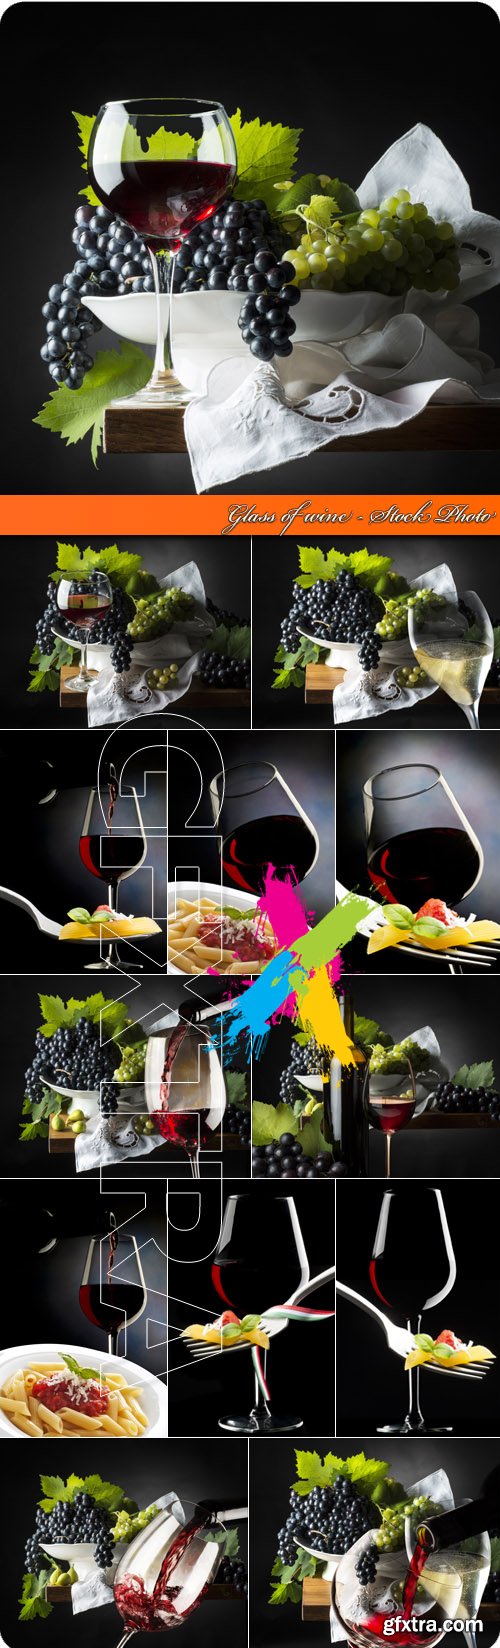 Glass of wine - Stock Photo